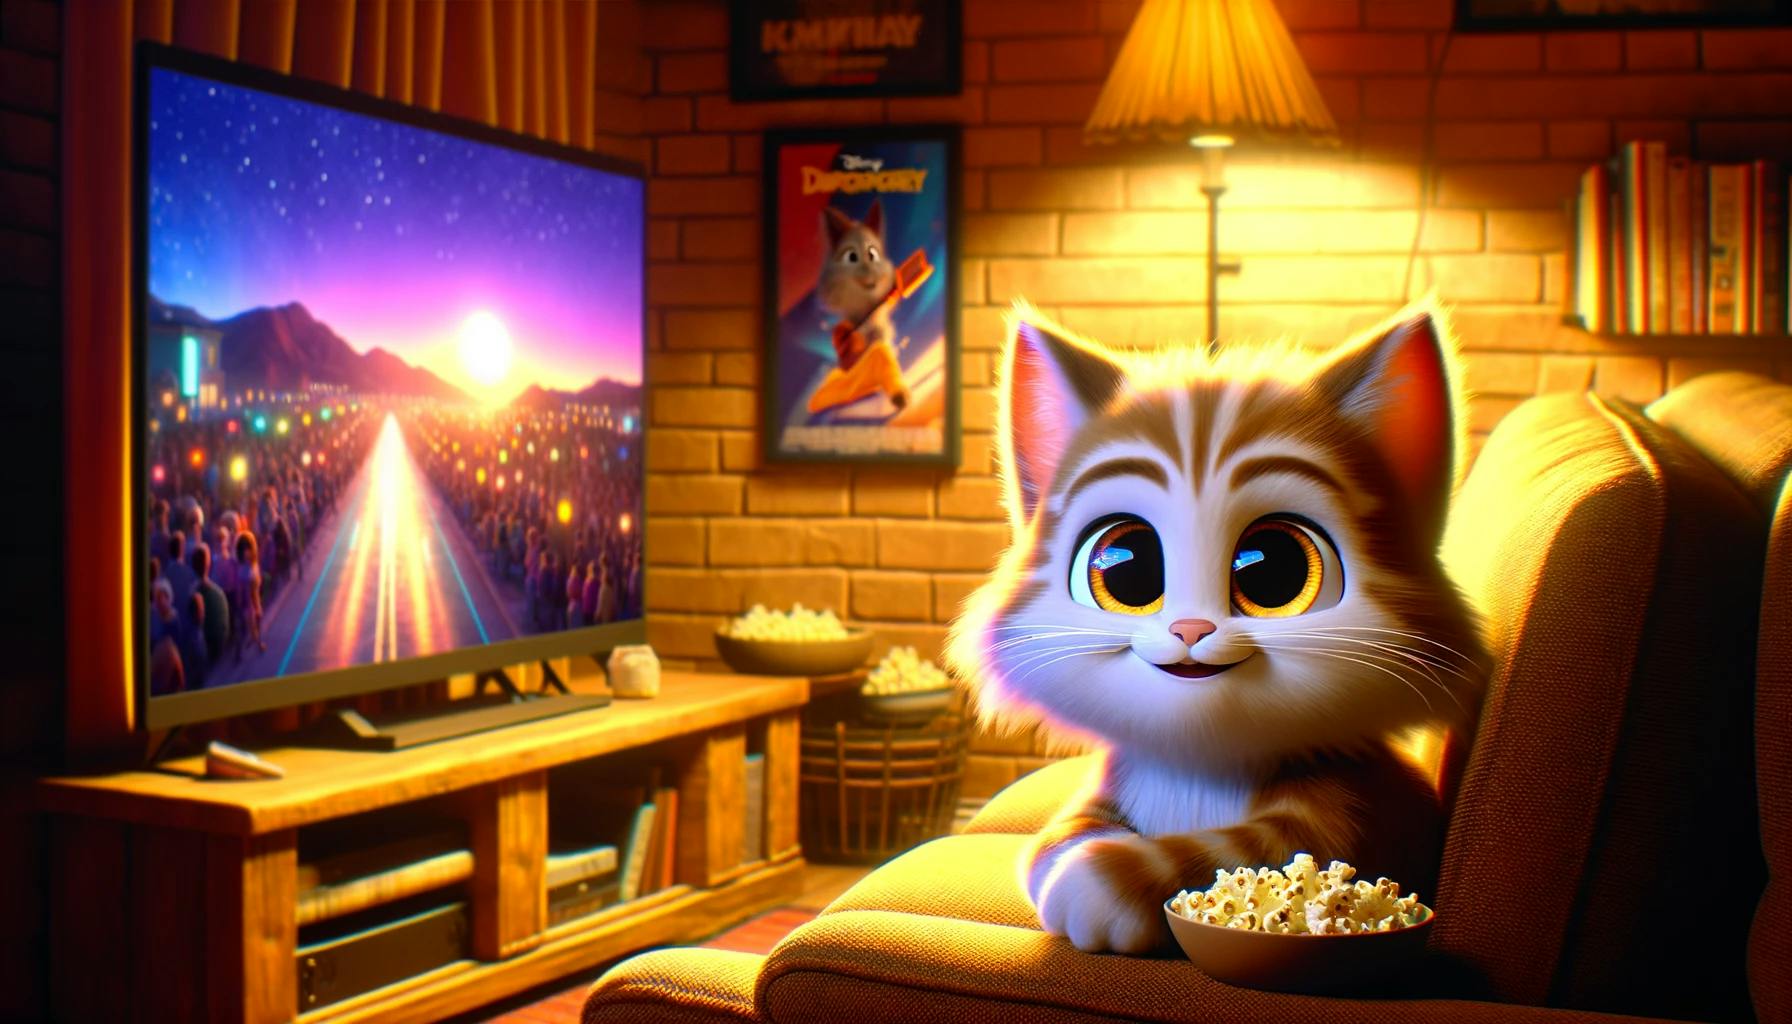 Random movie generator, cute cat watching movie on TV